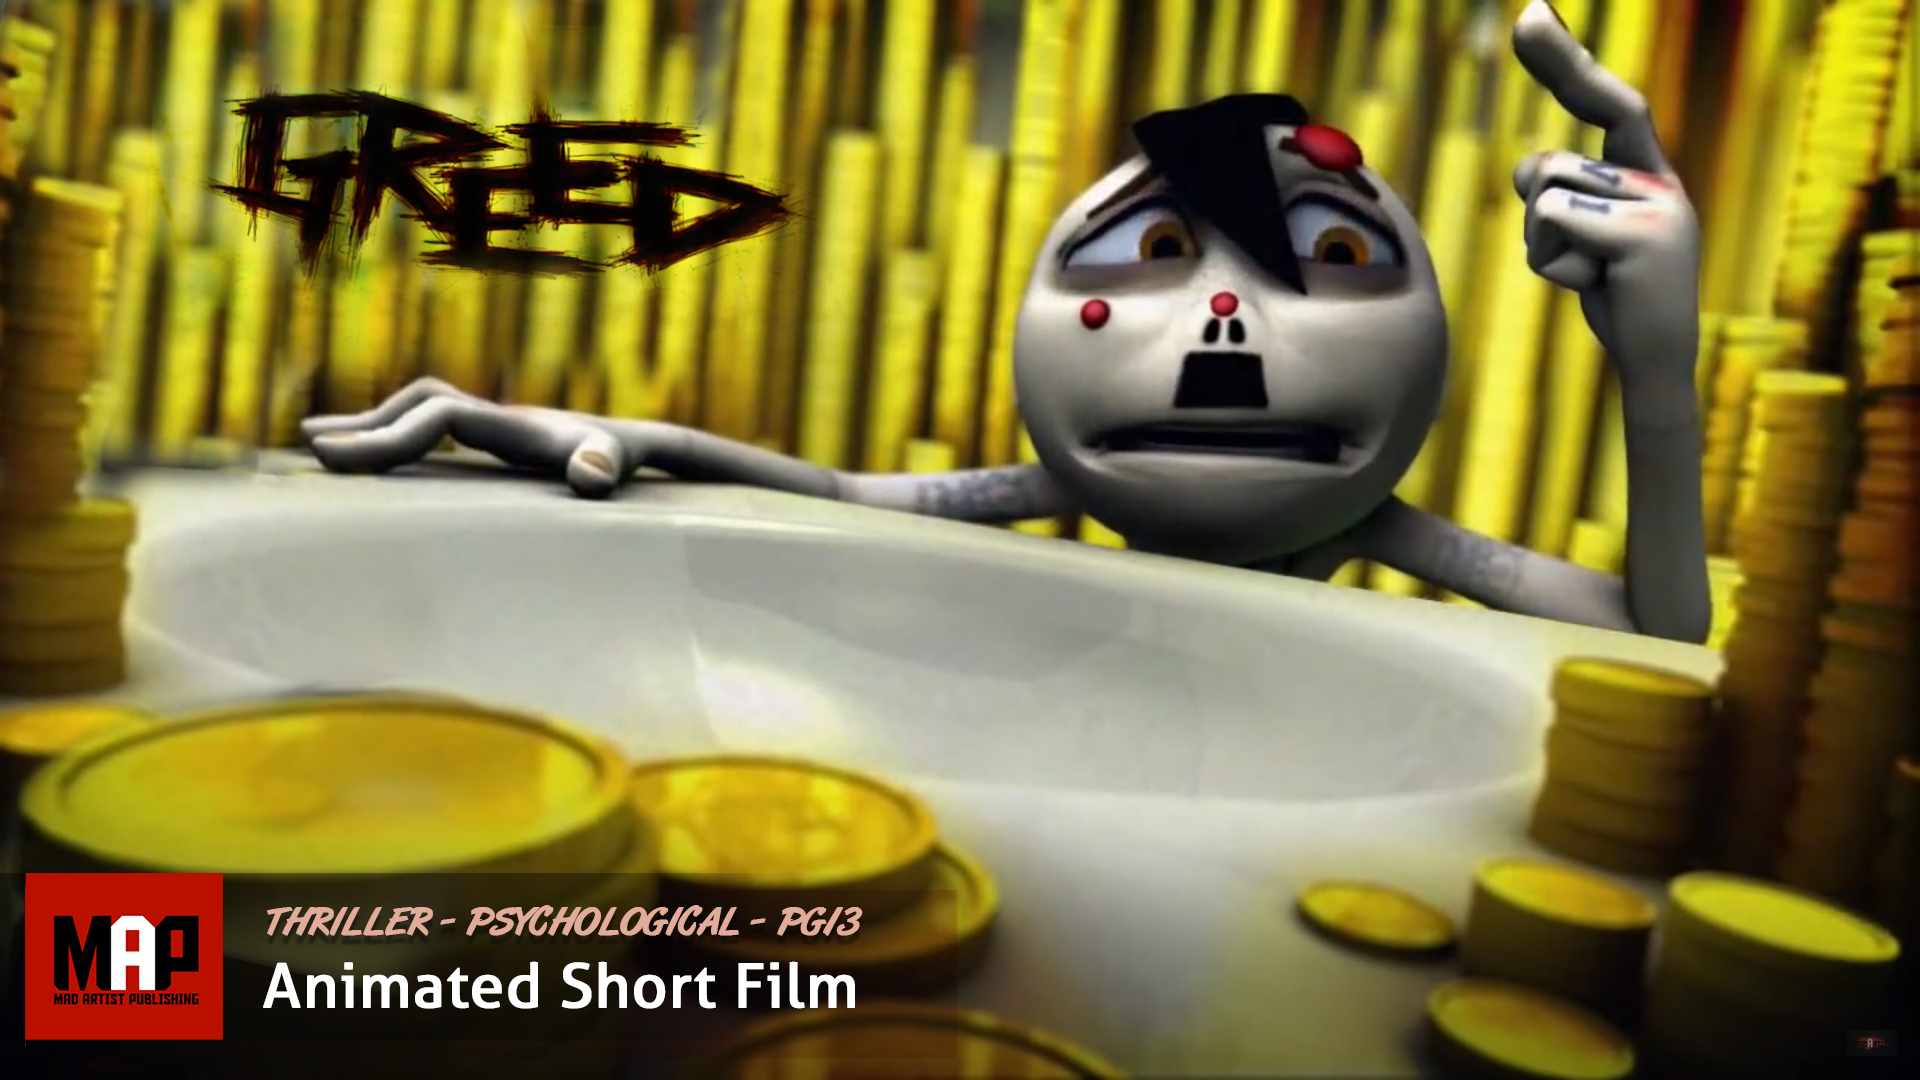 Psychological Thriller CGI 3d Animated Short Film ** GREED ** Award Winning Movie by Alli Sadegiani